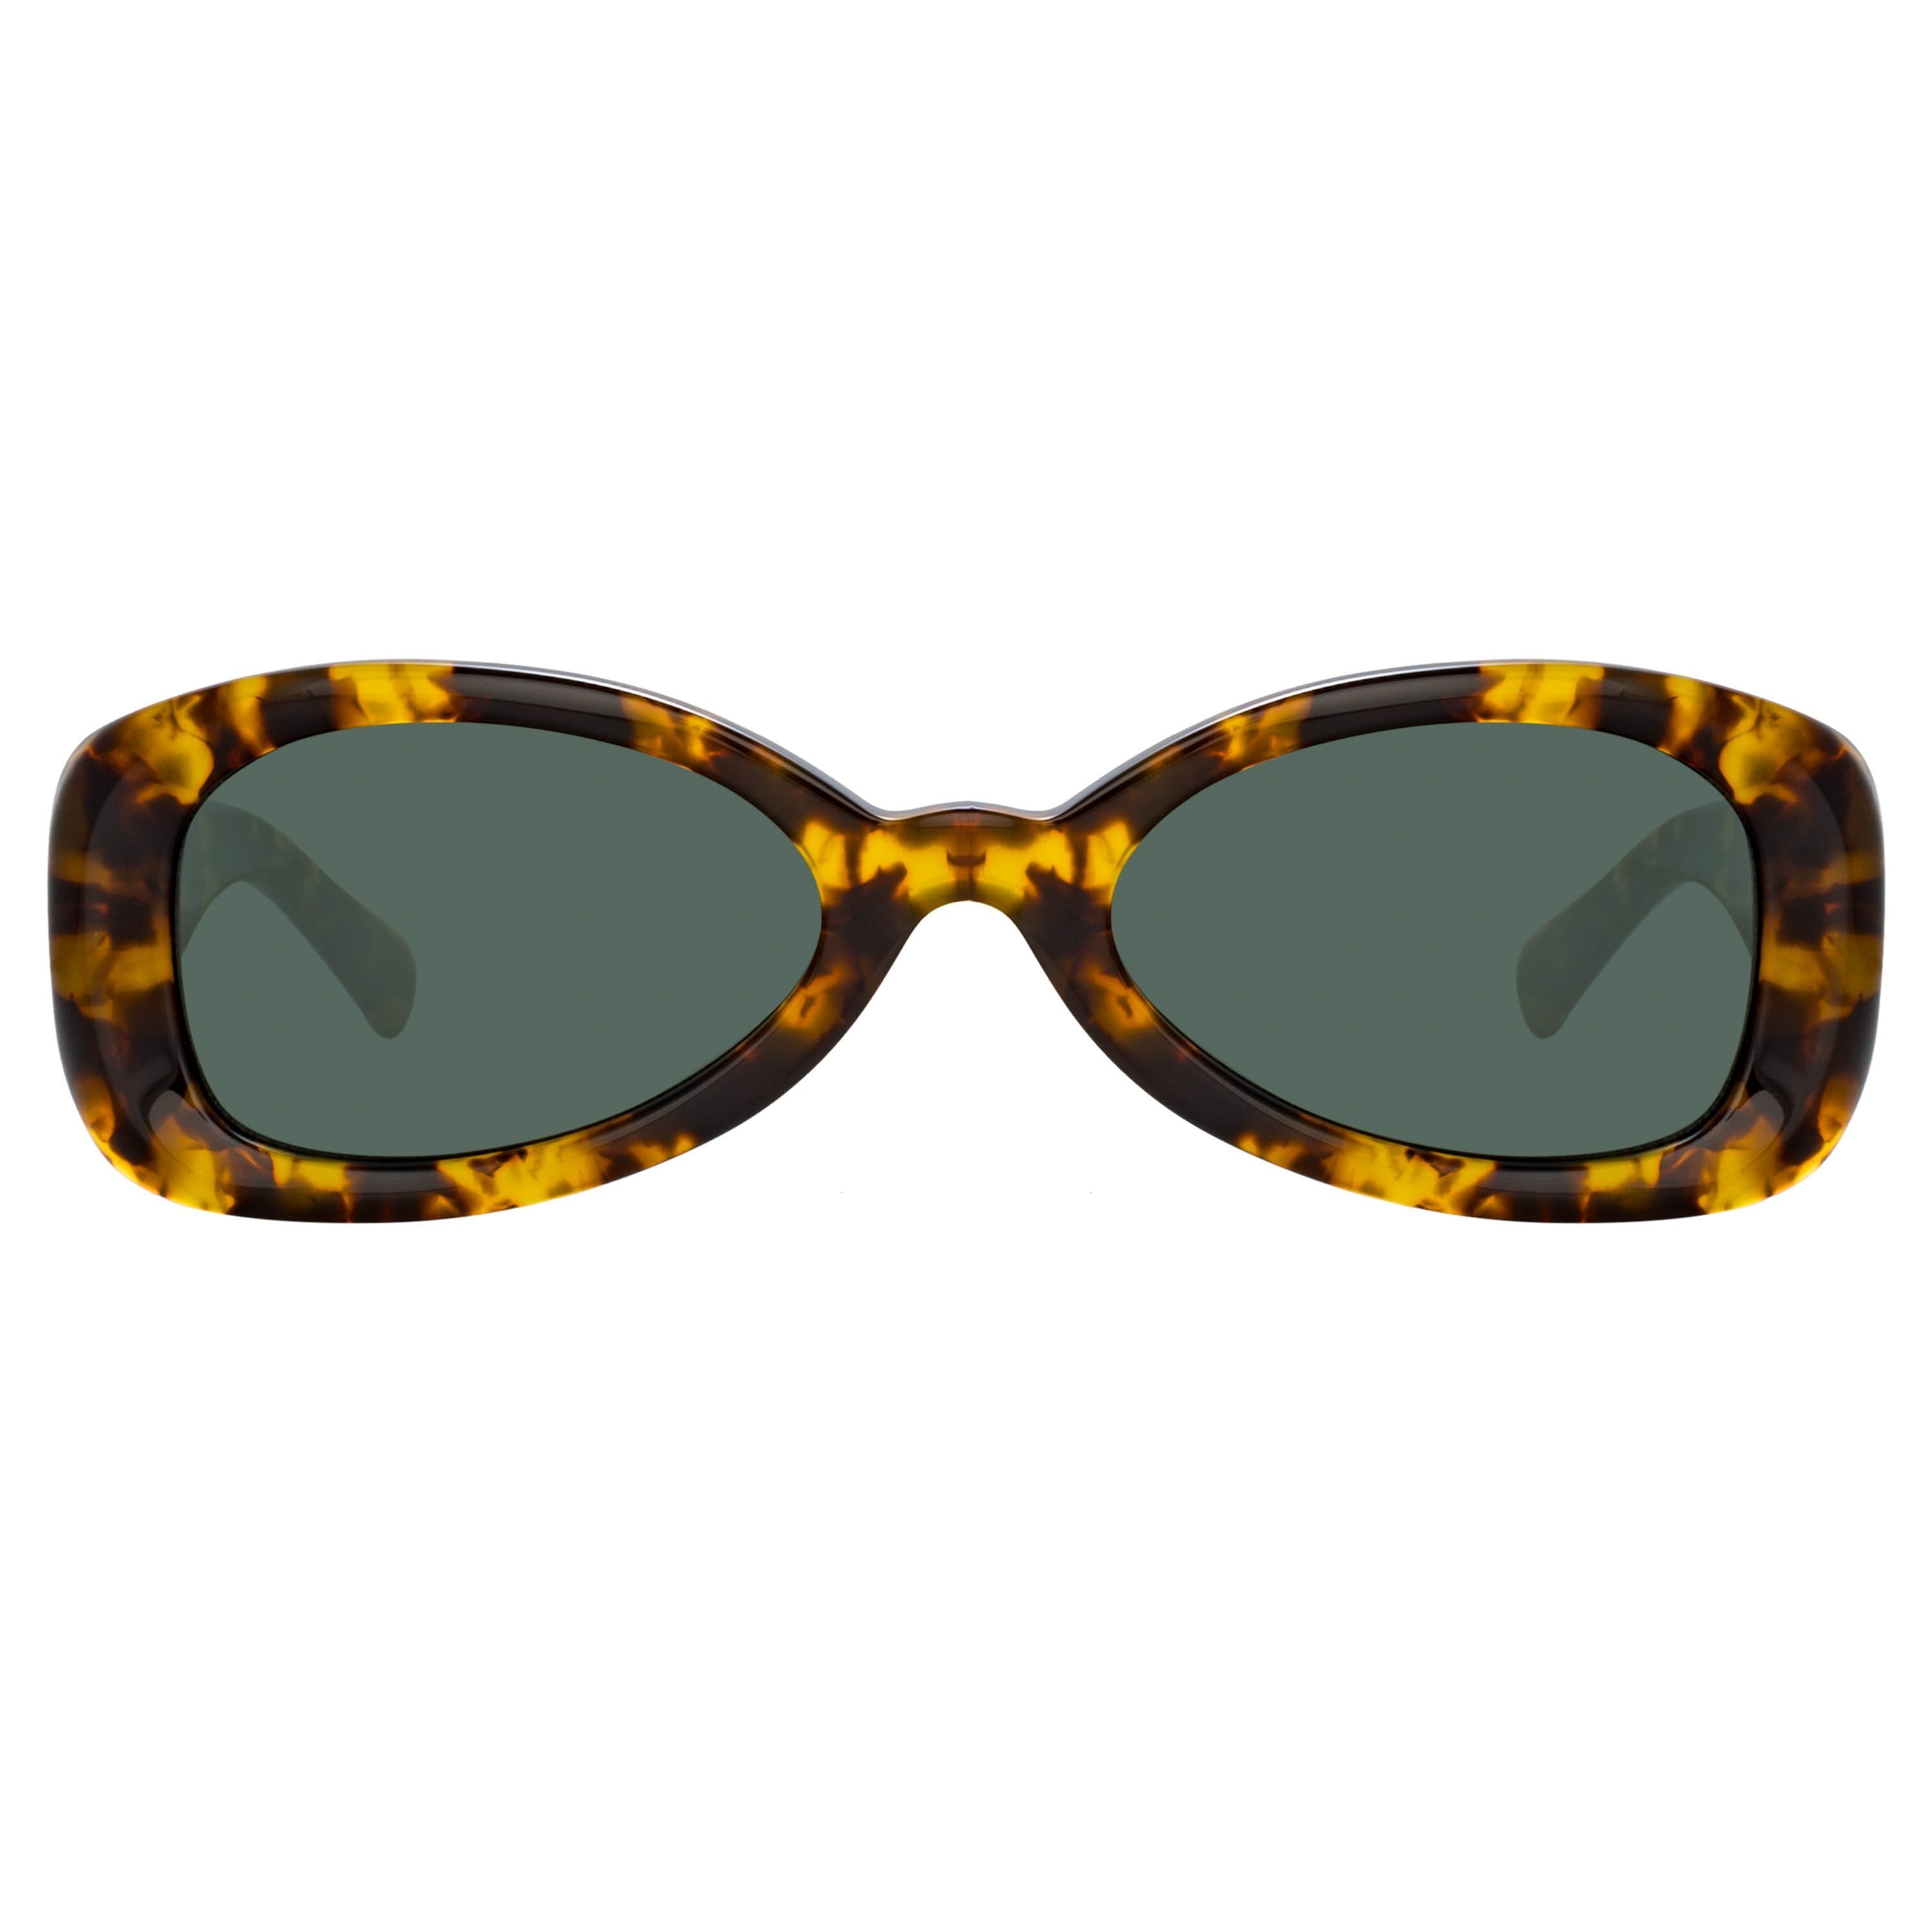 Color_DVN204C4SUN - Dries van Noten 204 Aviator Sunglasses in Tortoiseshell